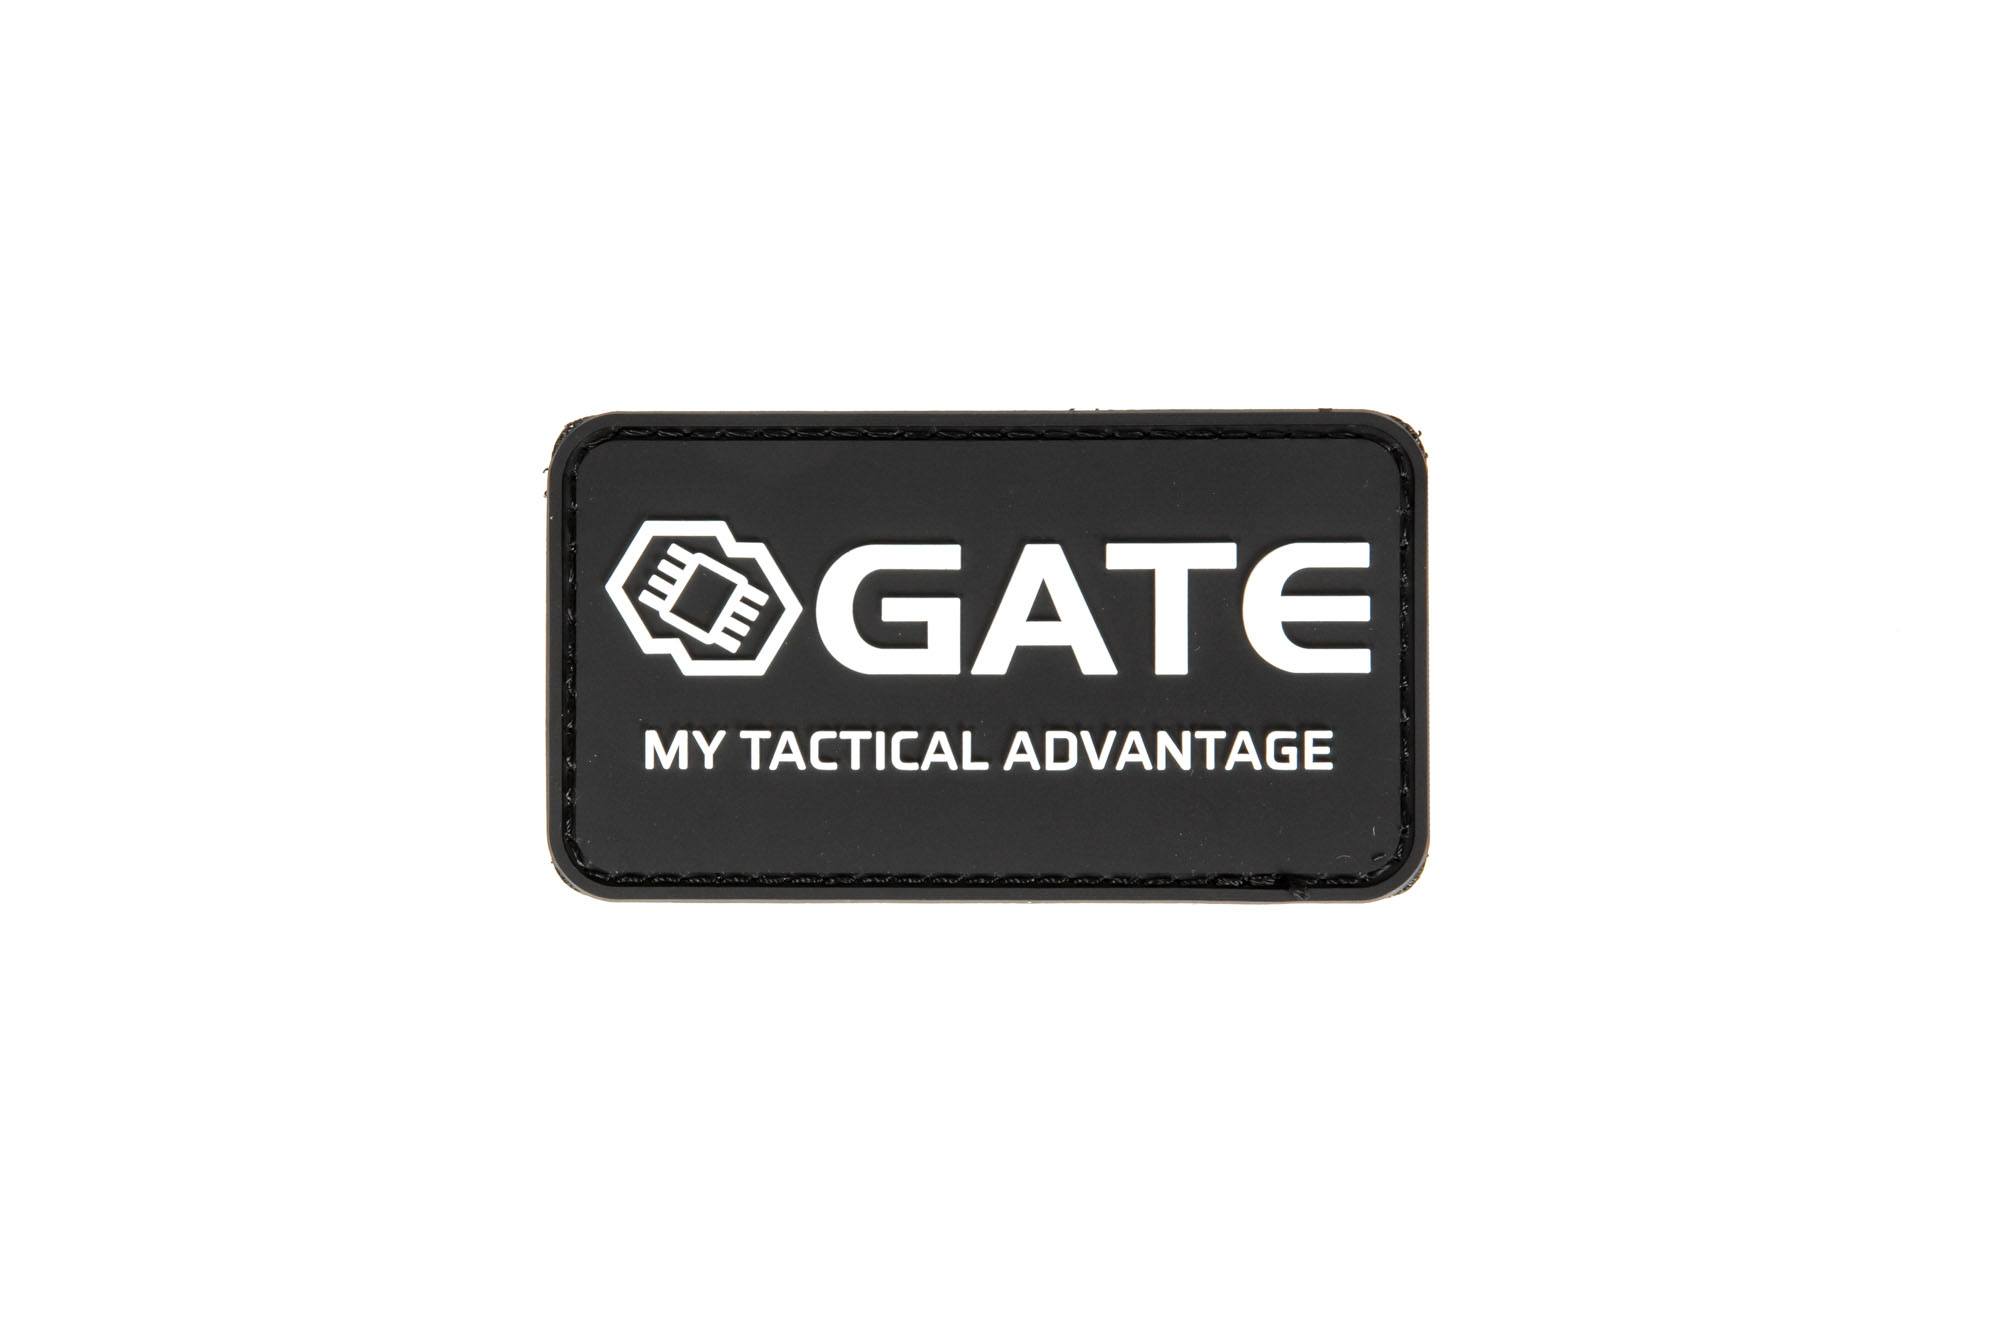 GATE My tactical advantage Patch